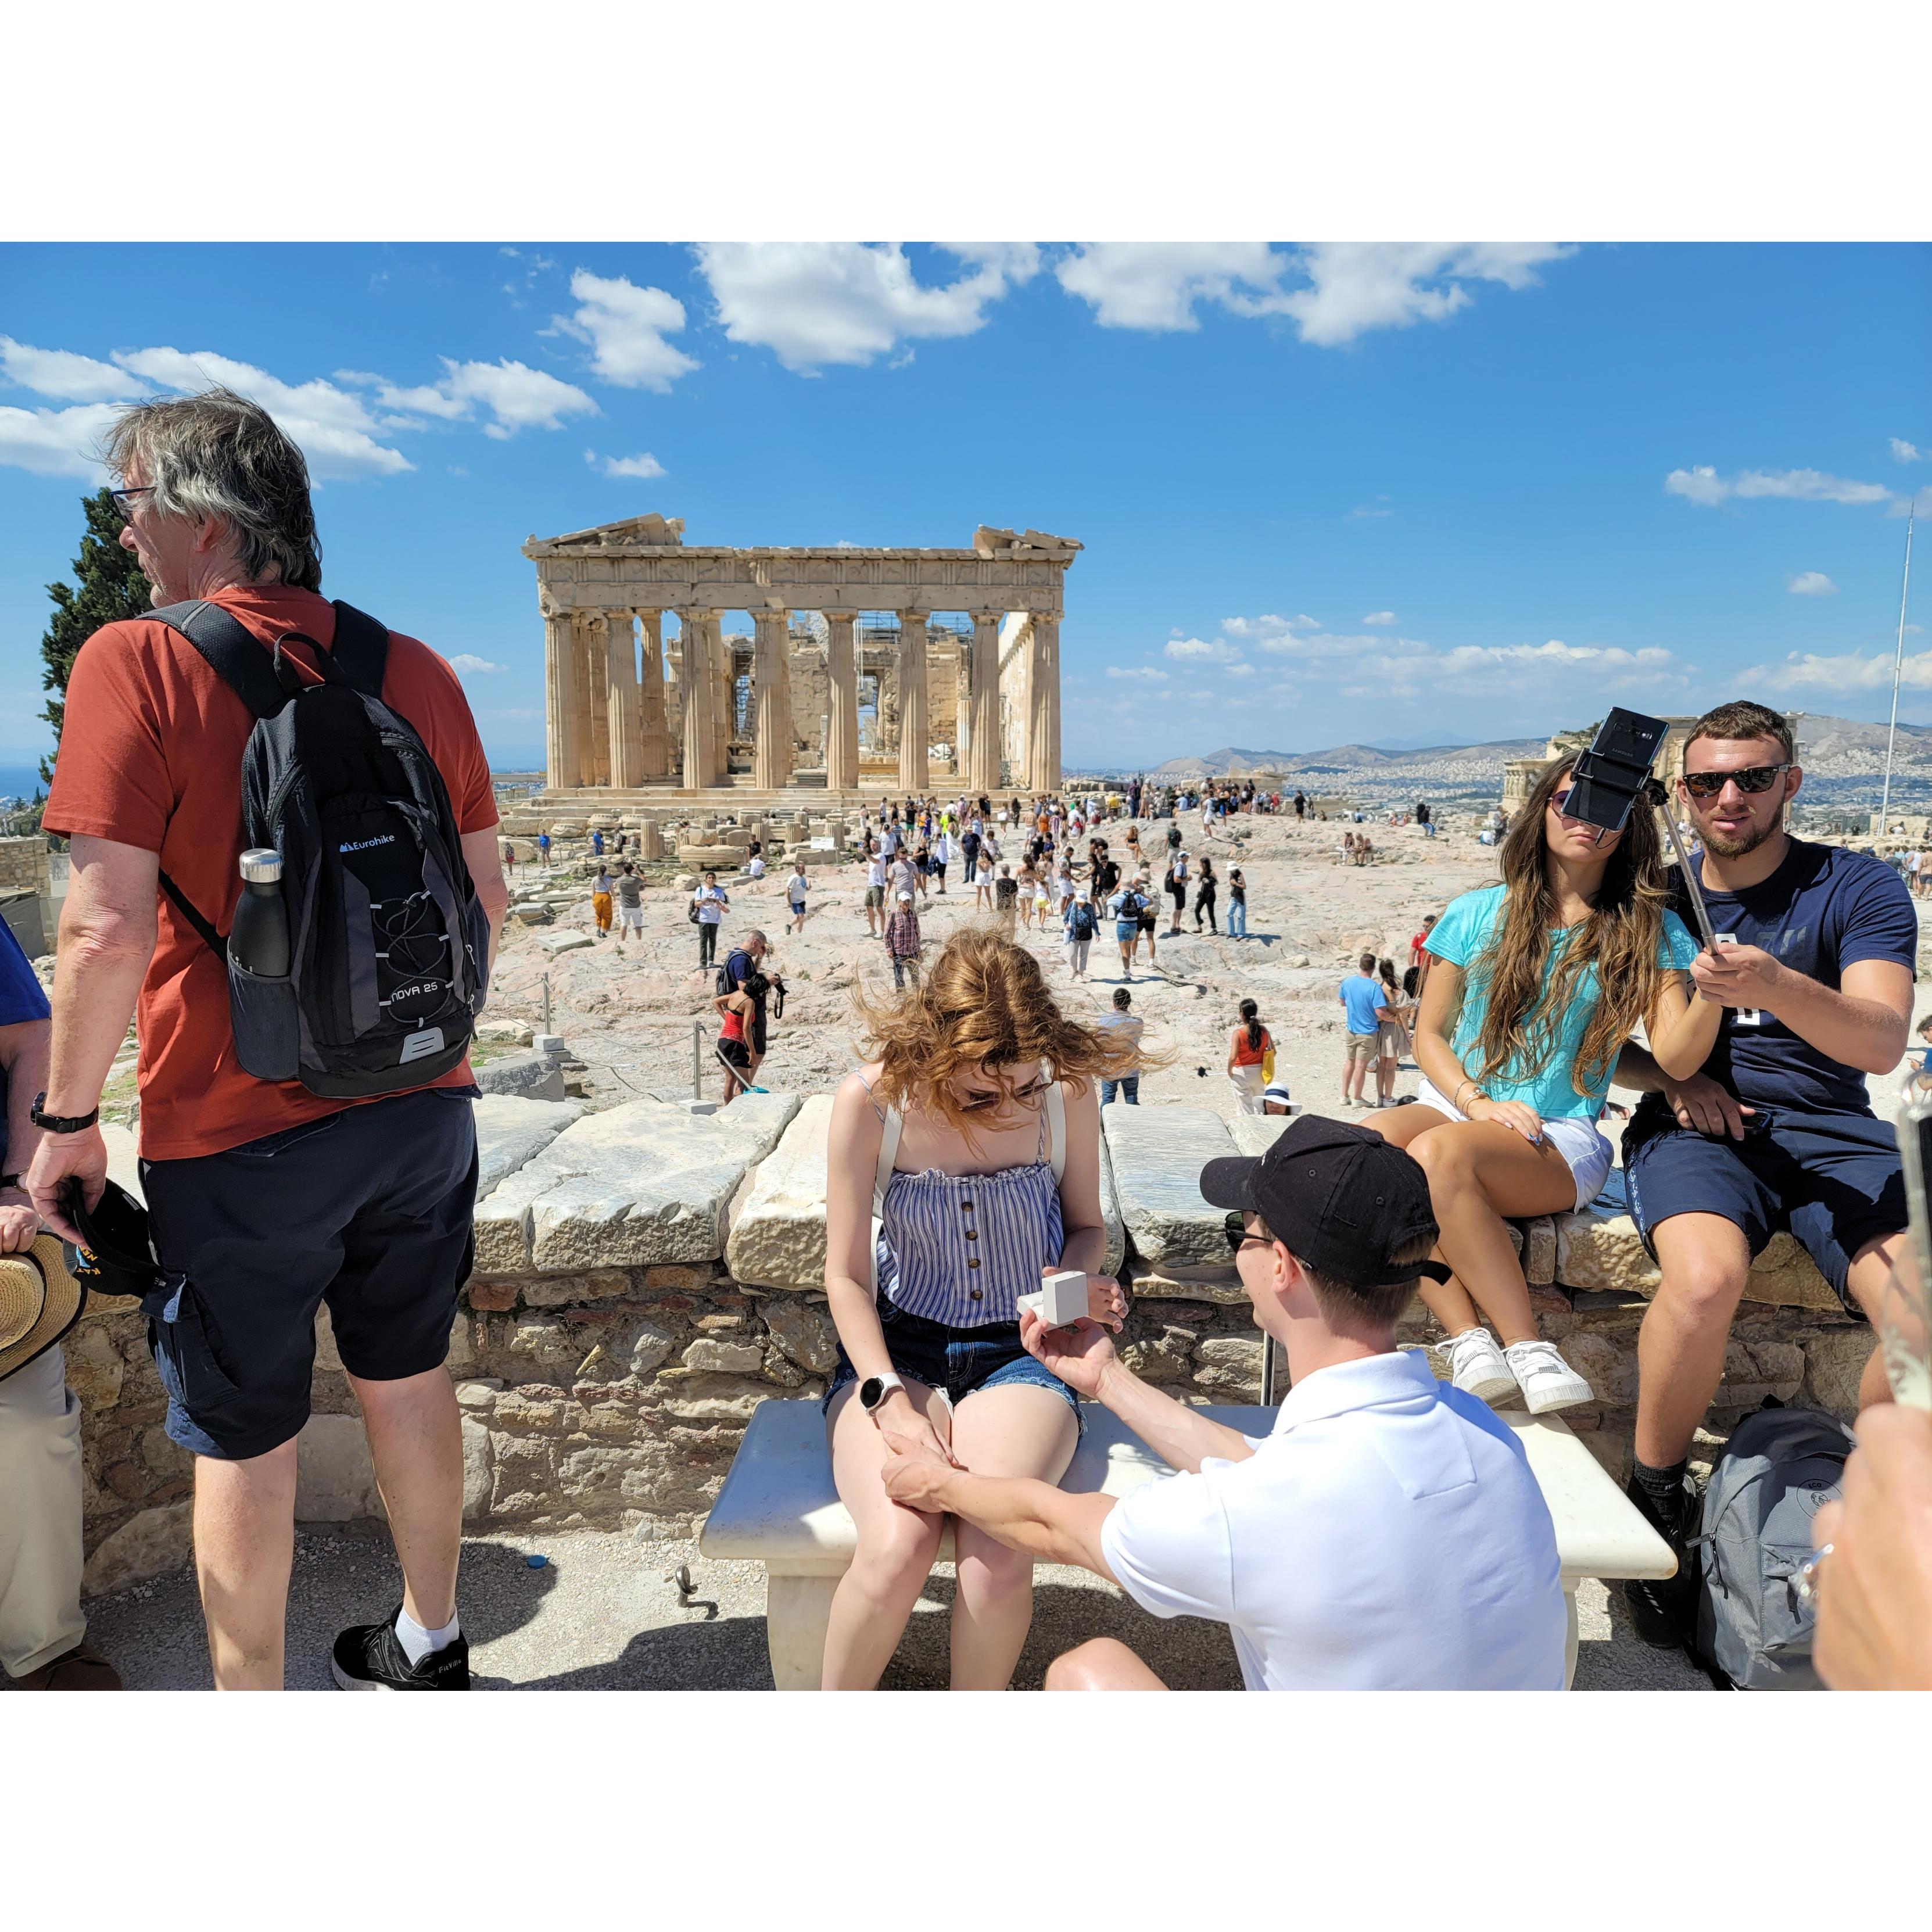 Daniel's Proposal at the Acropolis